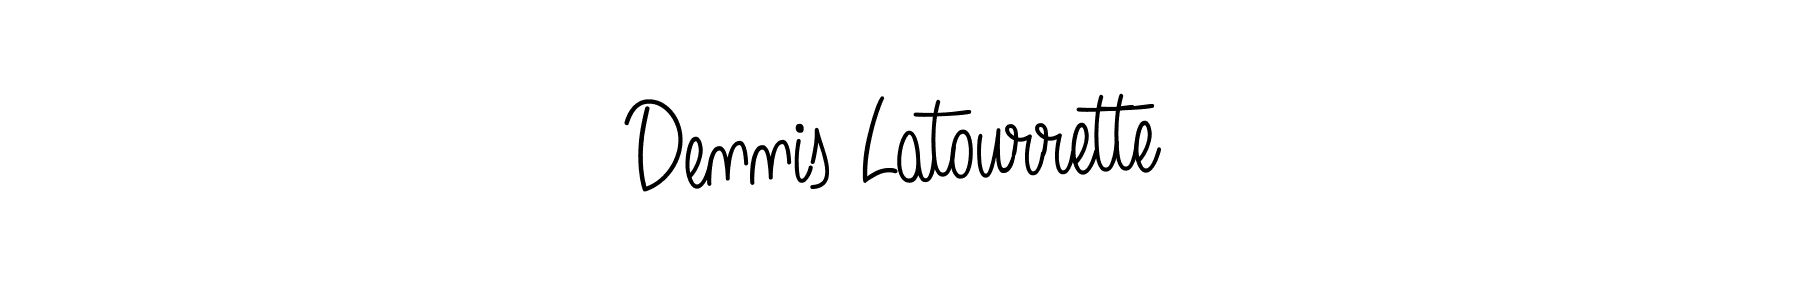 How to Draw Dennis Latourrette signature style? Angelique-Rose-font-FFP is a latest design signature styles for name Dennis Latourrette. Dennis Latourrette signature style 5 images and pictures png